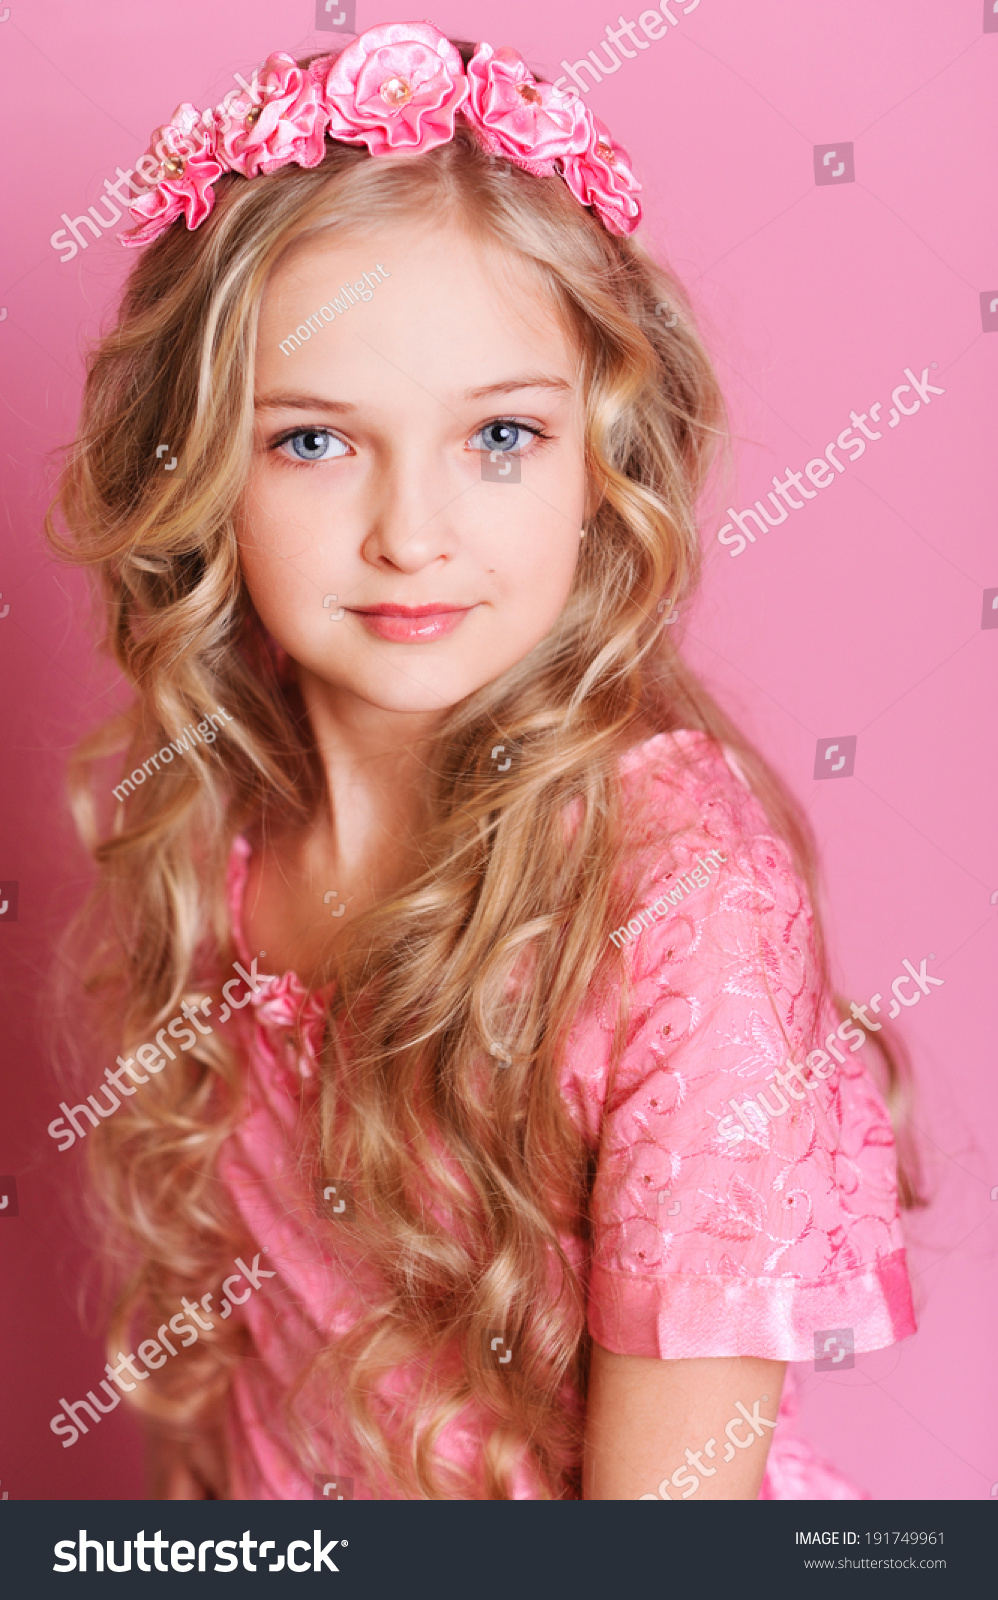 Cute Kid Girl 10 Years Old Stock Photo 191749961 - Shutterstock